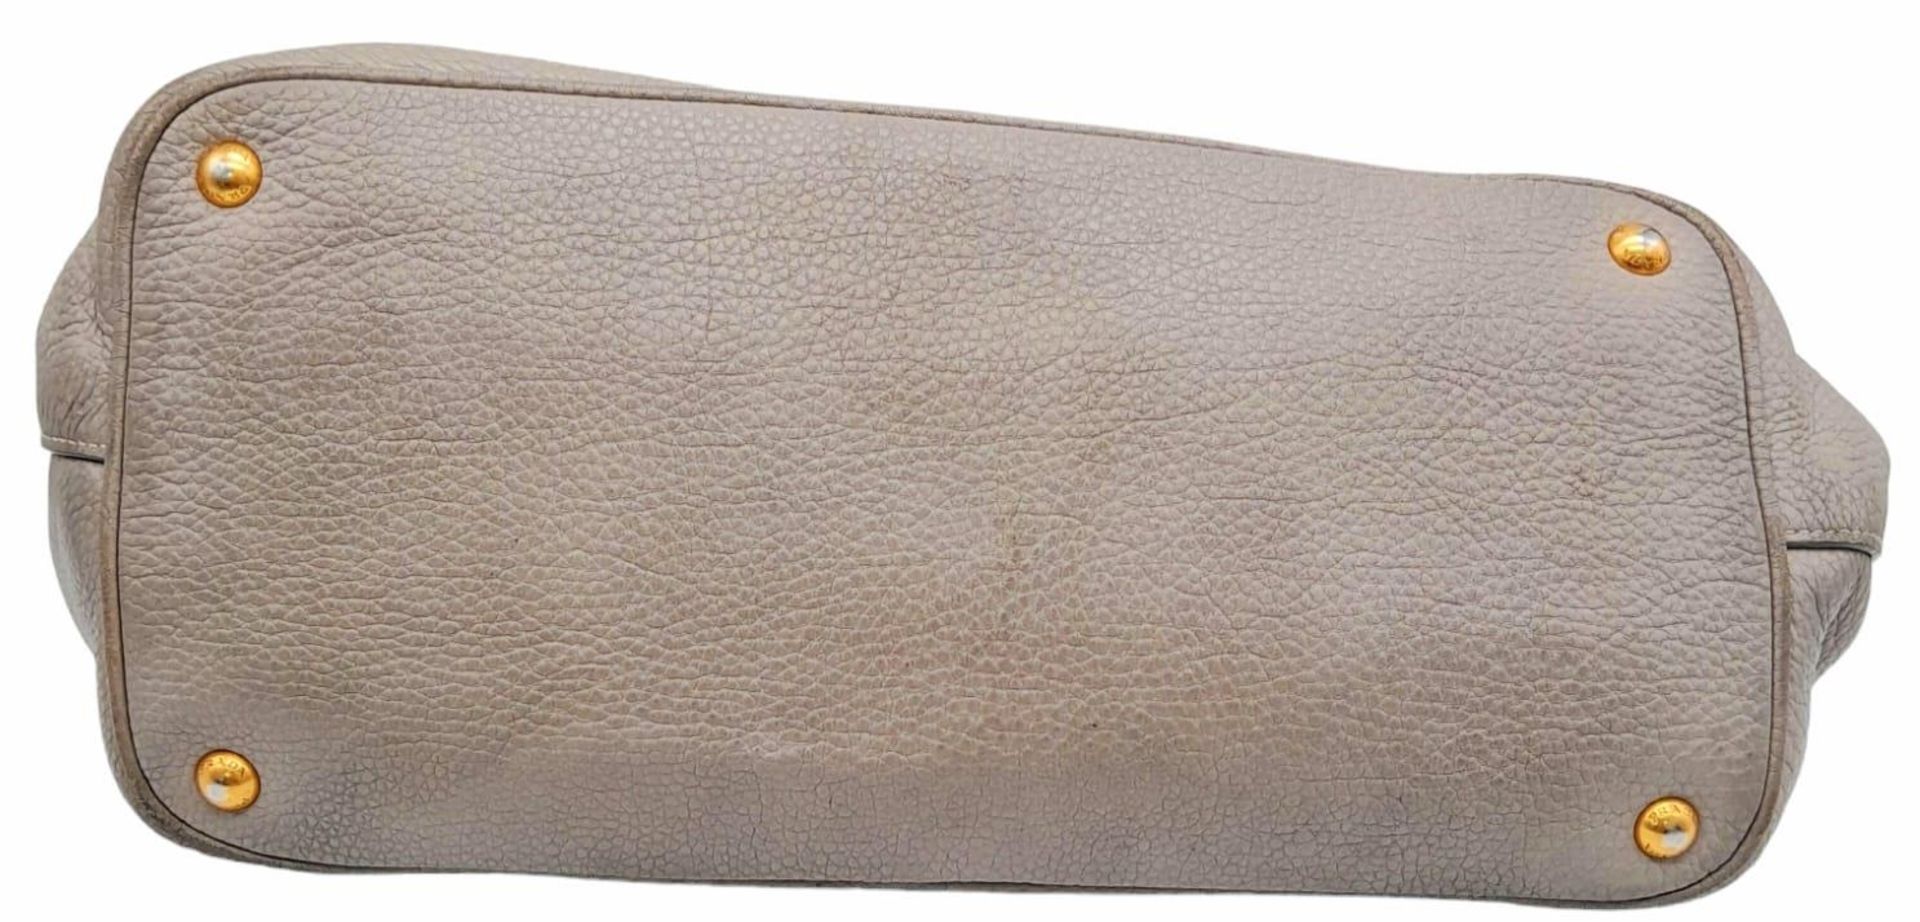 A Prada Vitello Daino Tote Pomice Bag. Textured leather exterior with gold-tone hardware. Decorative - Image 4 of 9